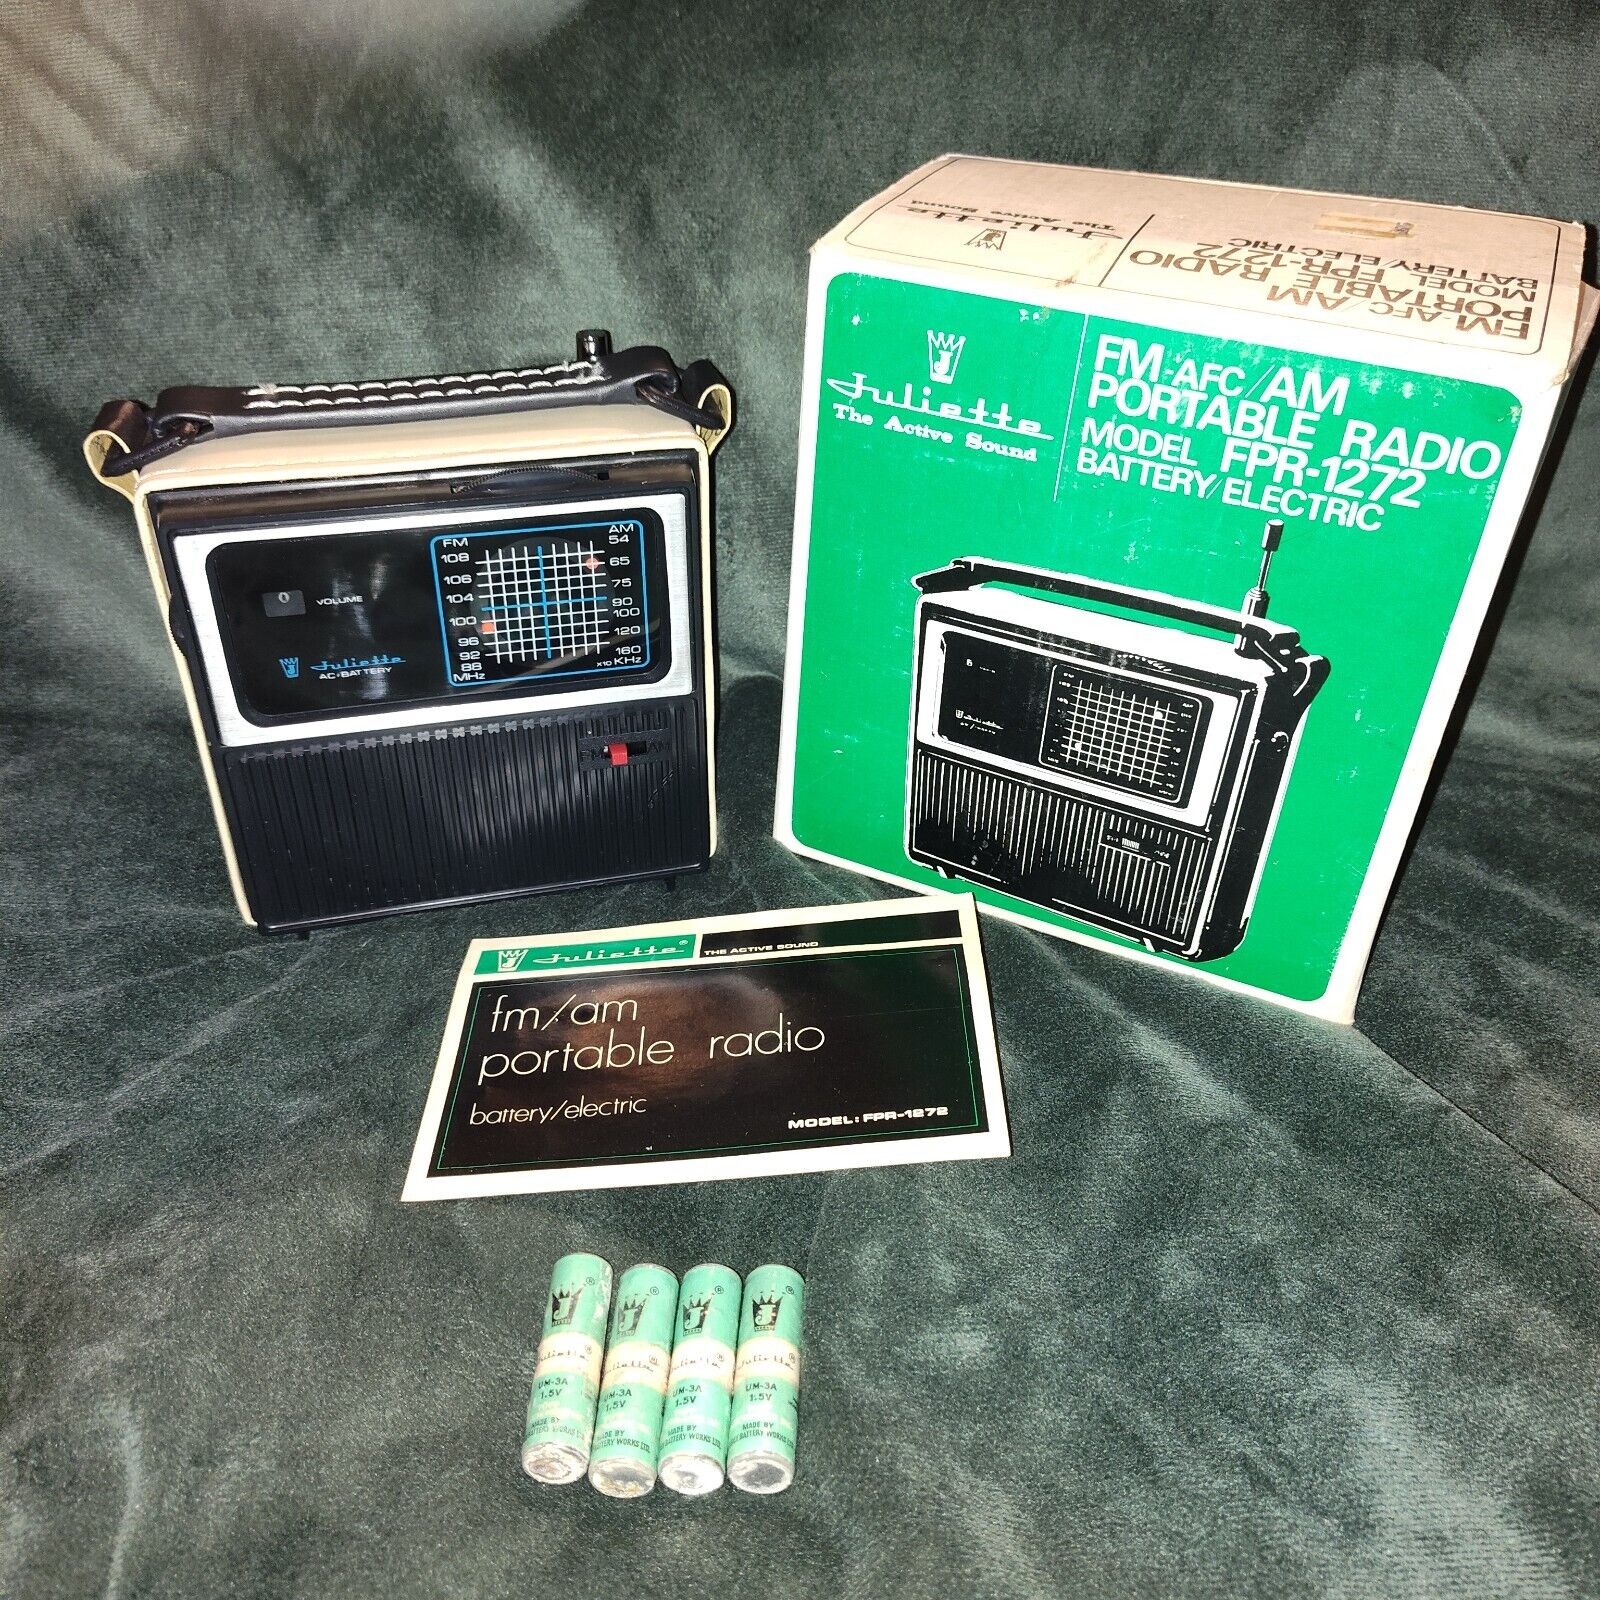 Vintage Juliette FM-AFC/AM Portable Radio Model FPR-1272 with Box & Manual